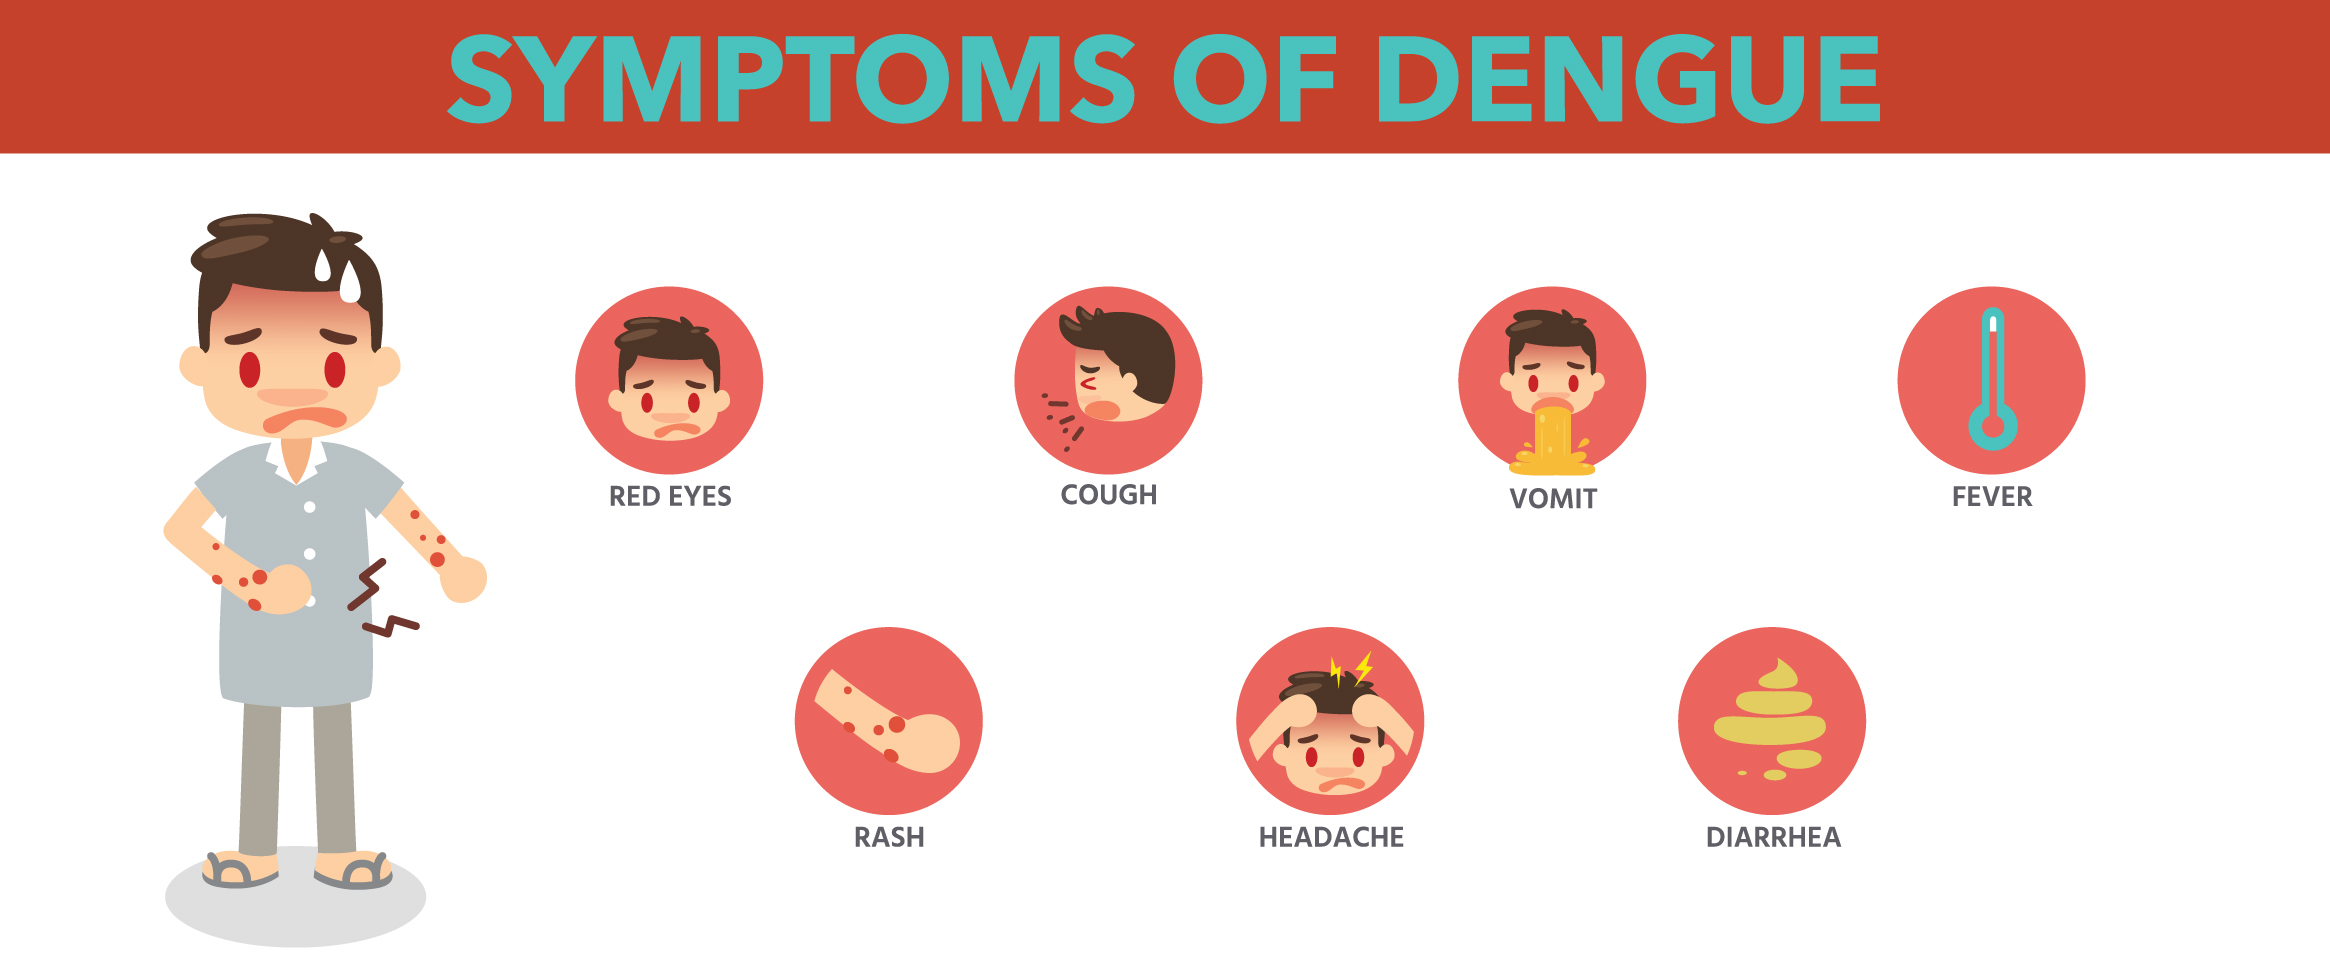 Symptoms of Dengue Fever in India